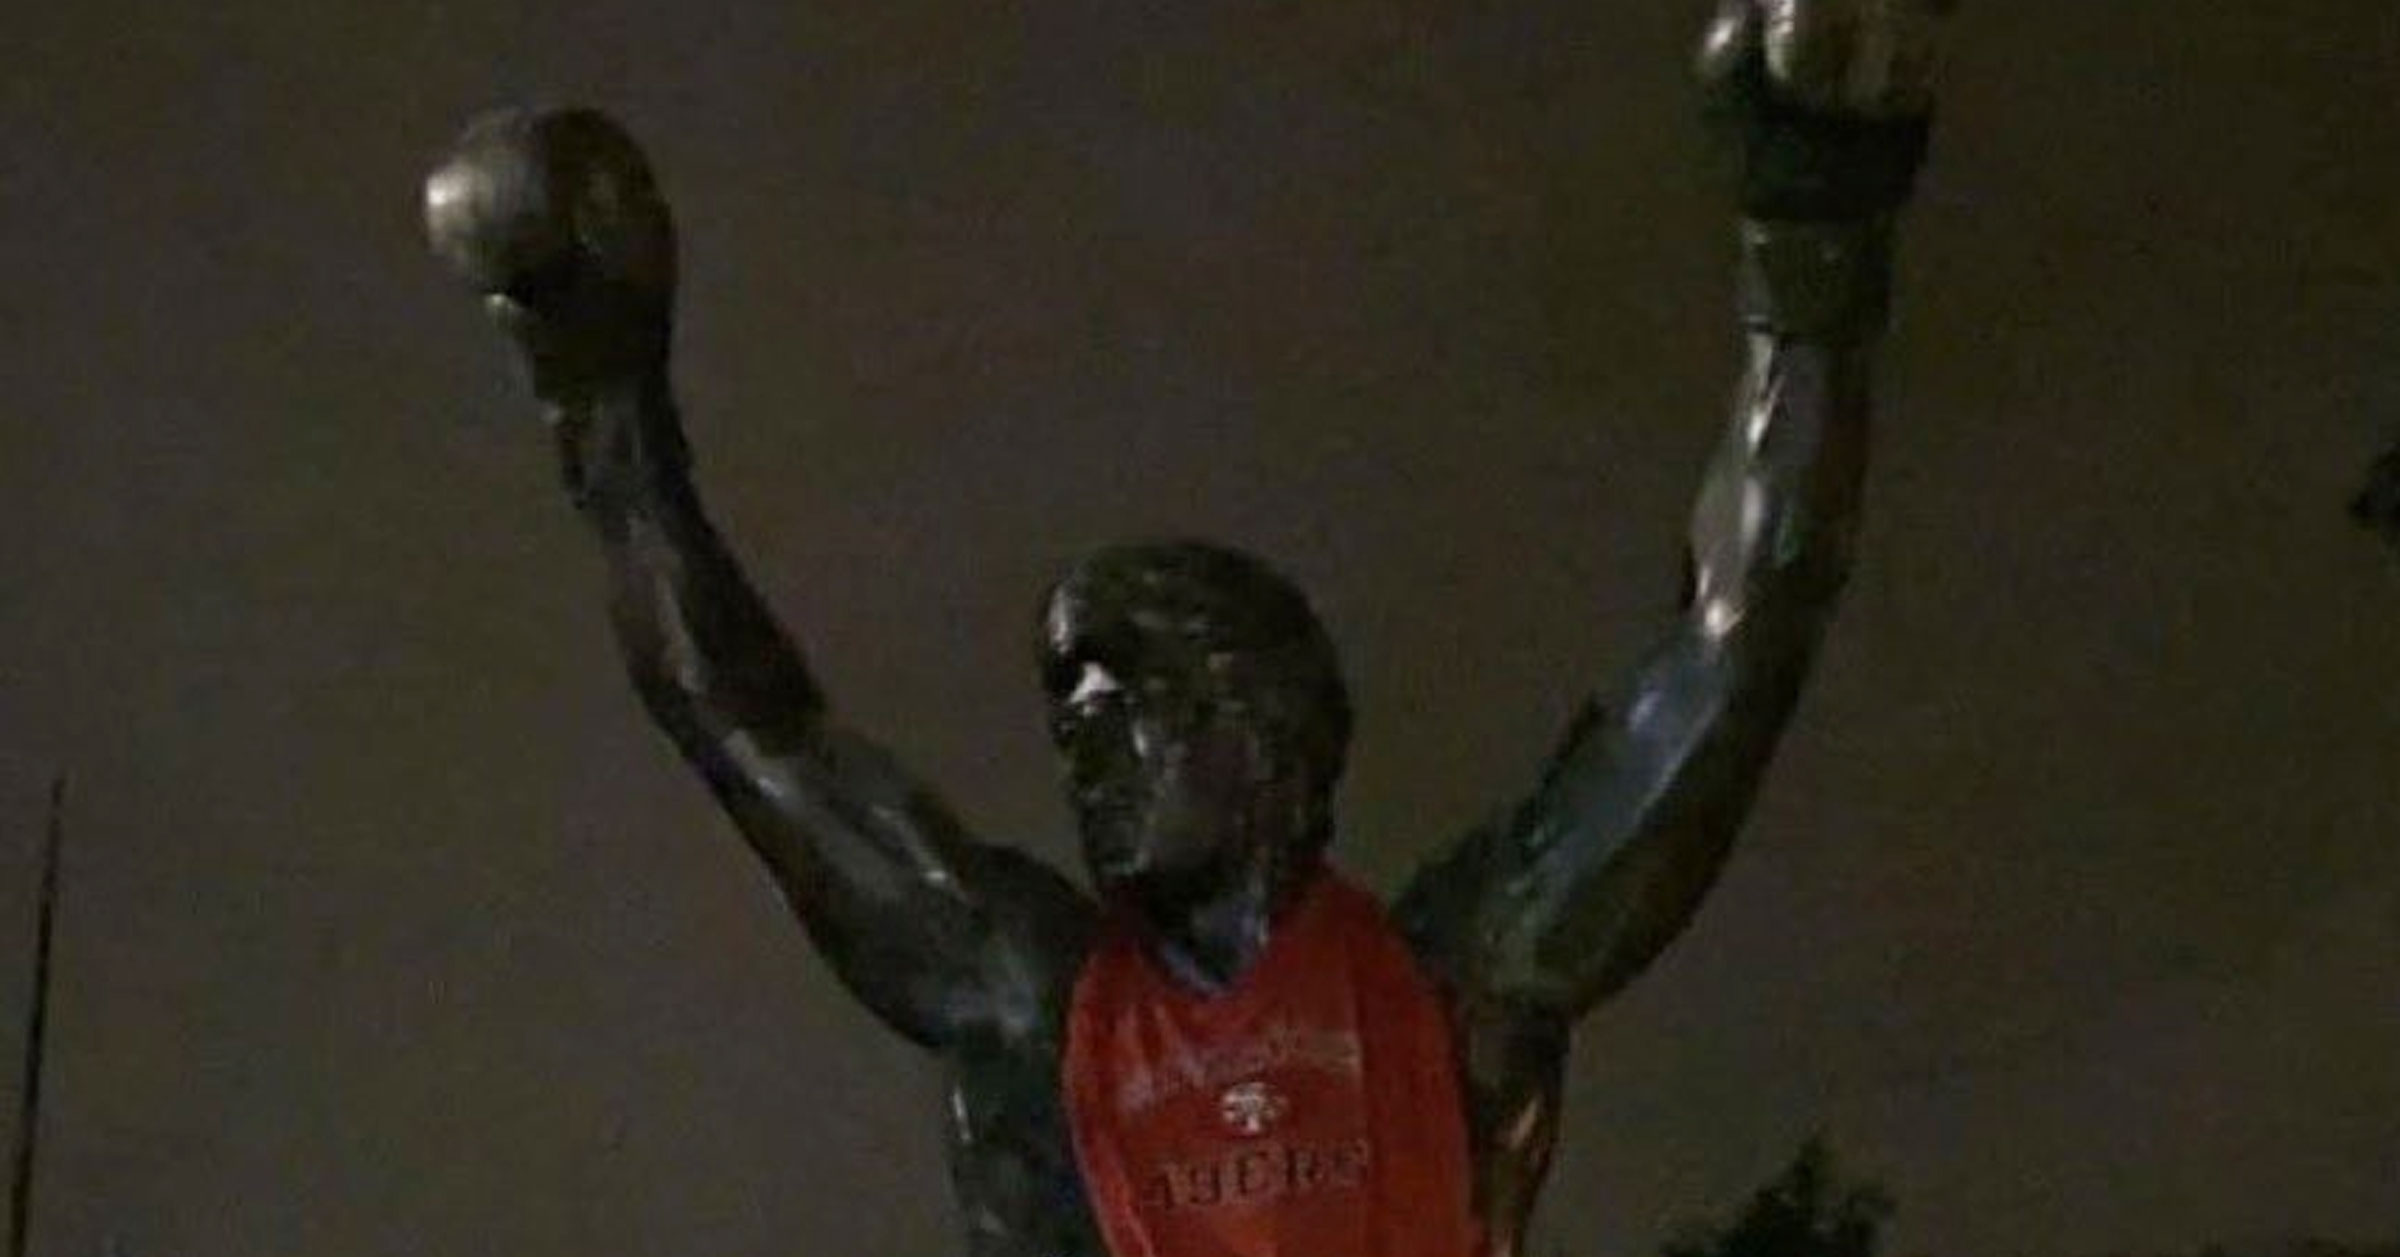 49ers fans rocky statue